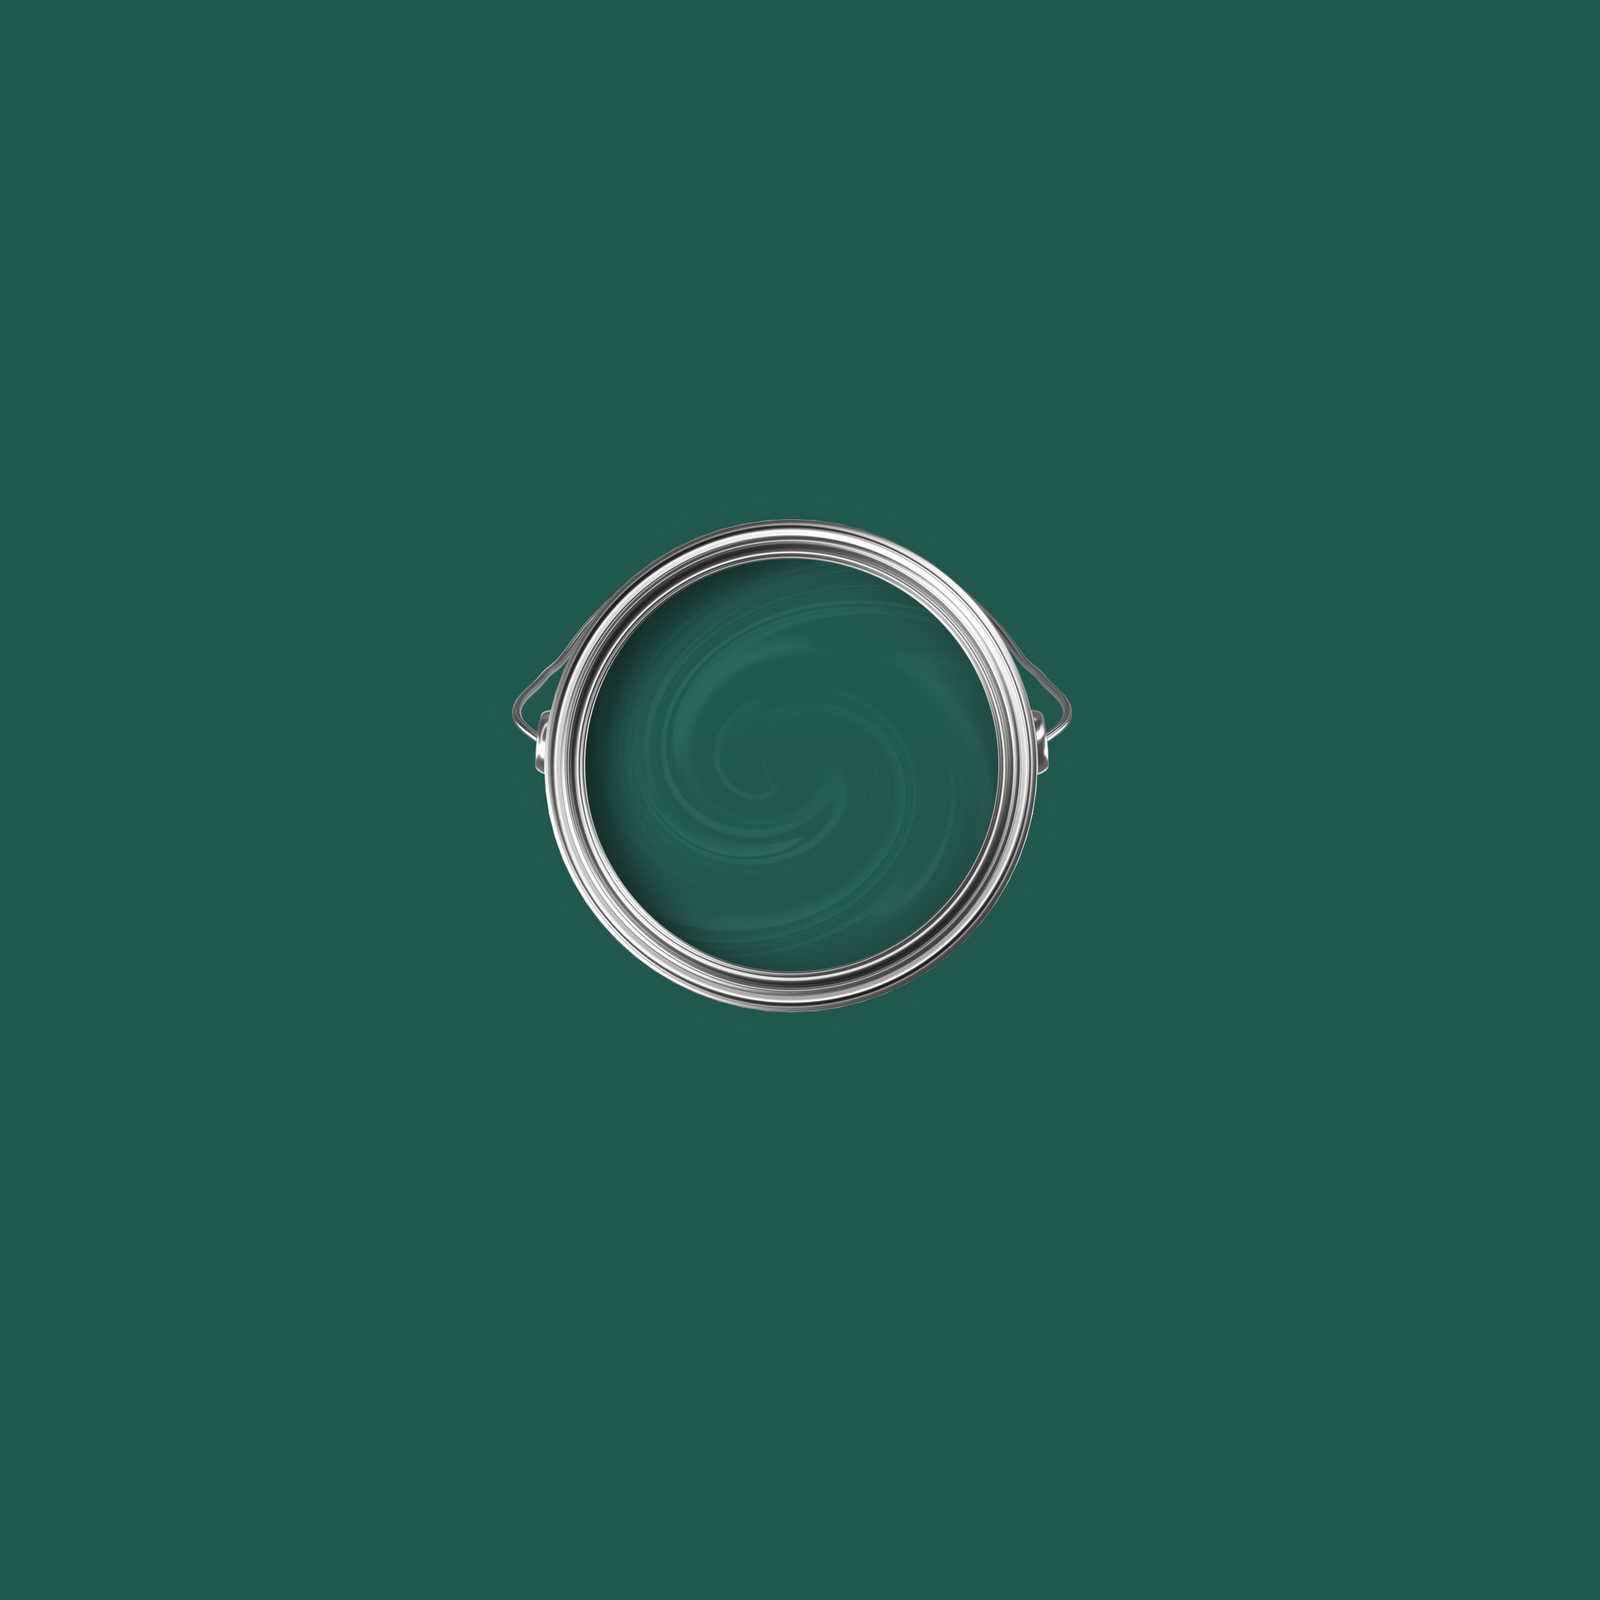             Premium Muurverf prachtig smaragdgroen »Expressive Emerald« NW412 – 1 liter
        